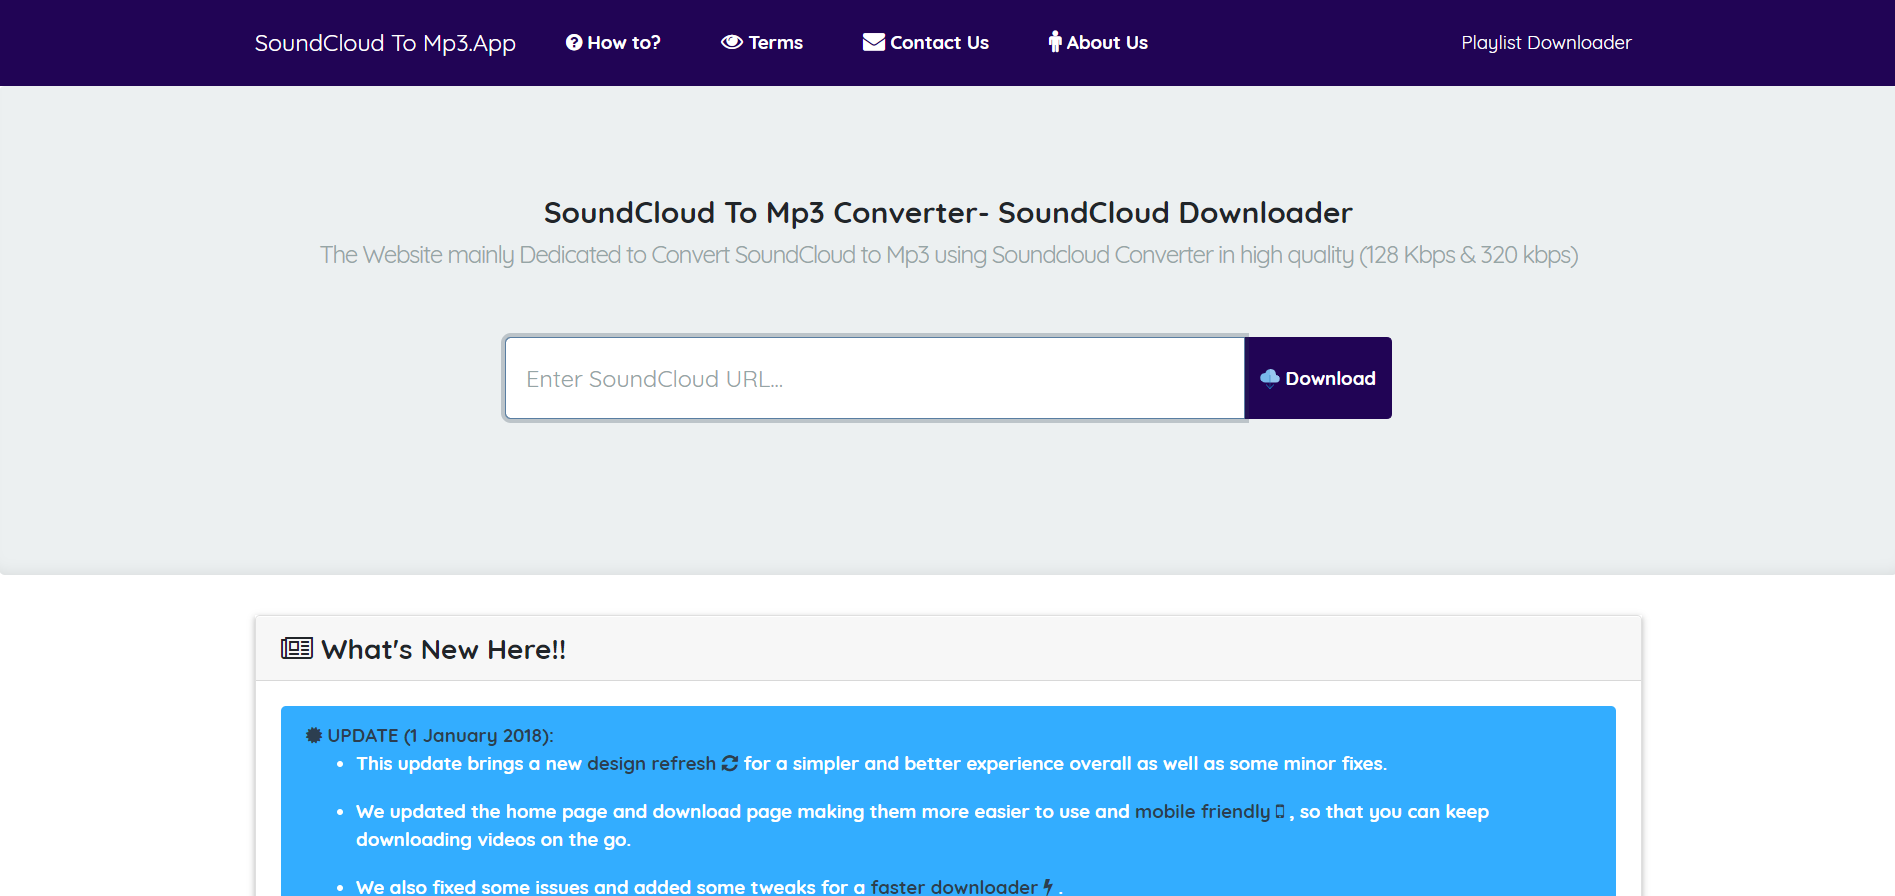 soundcloud download 320kbps